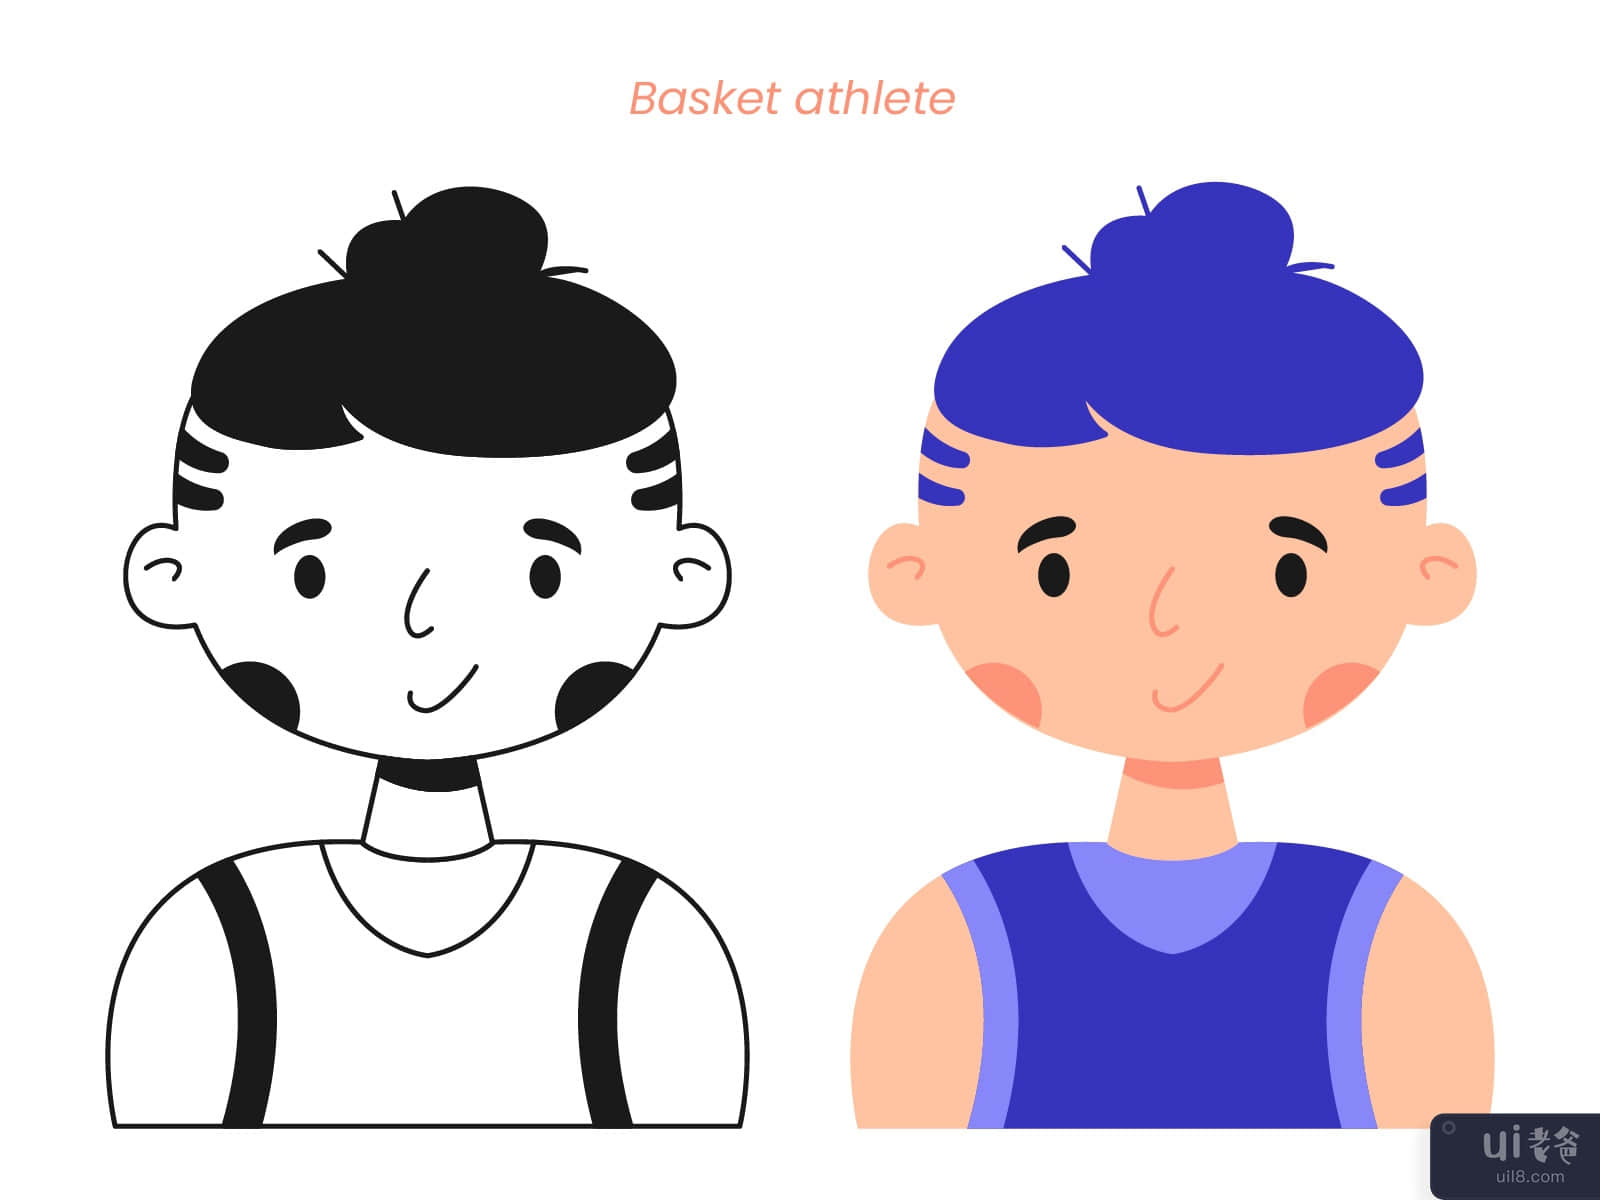 Basket Avatar Illustration